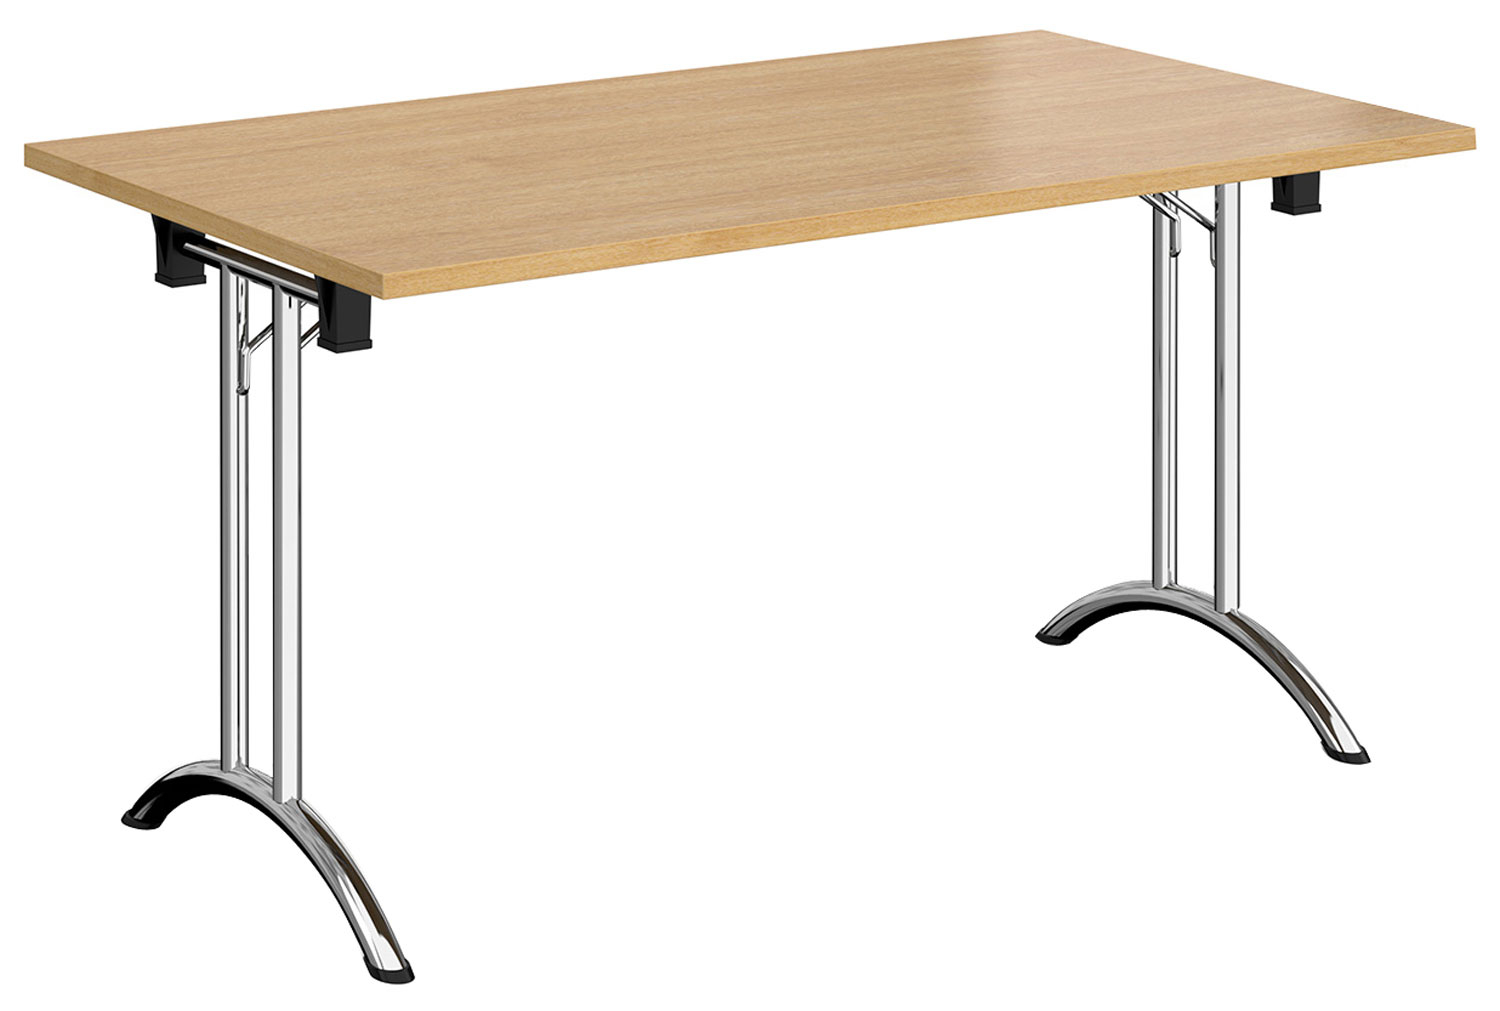 Blaga Rectangular Folding Table, 140wx80dx73h (cm), Oak